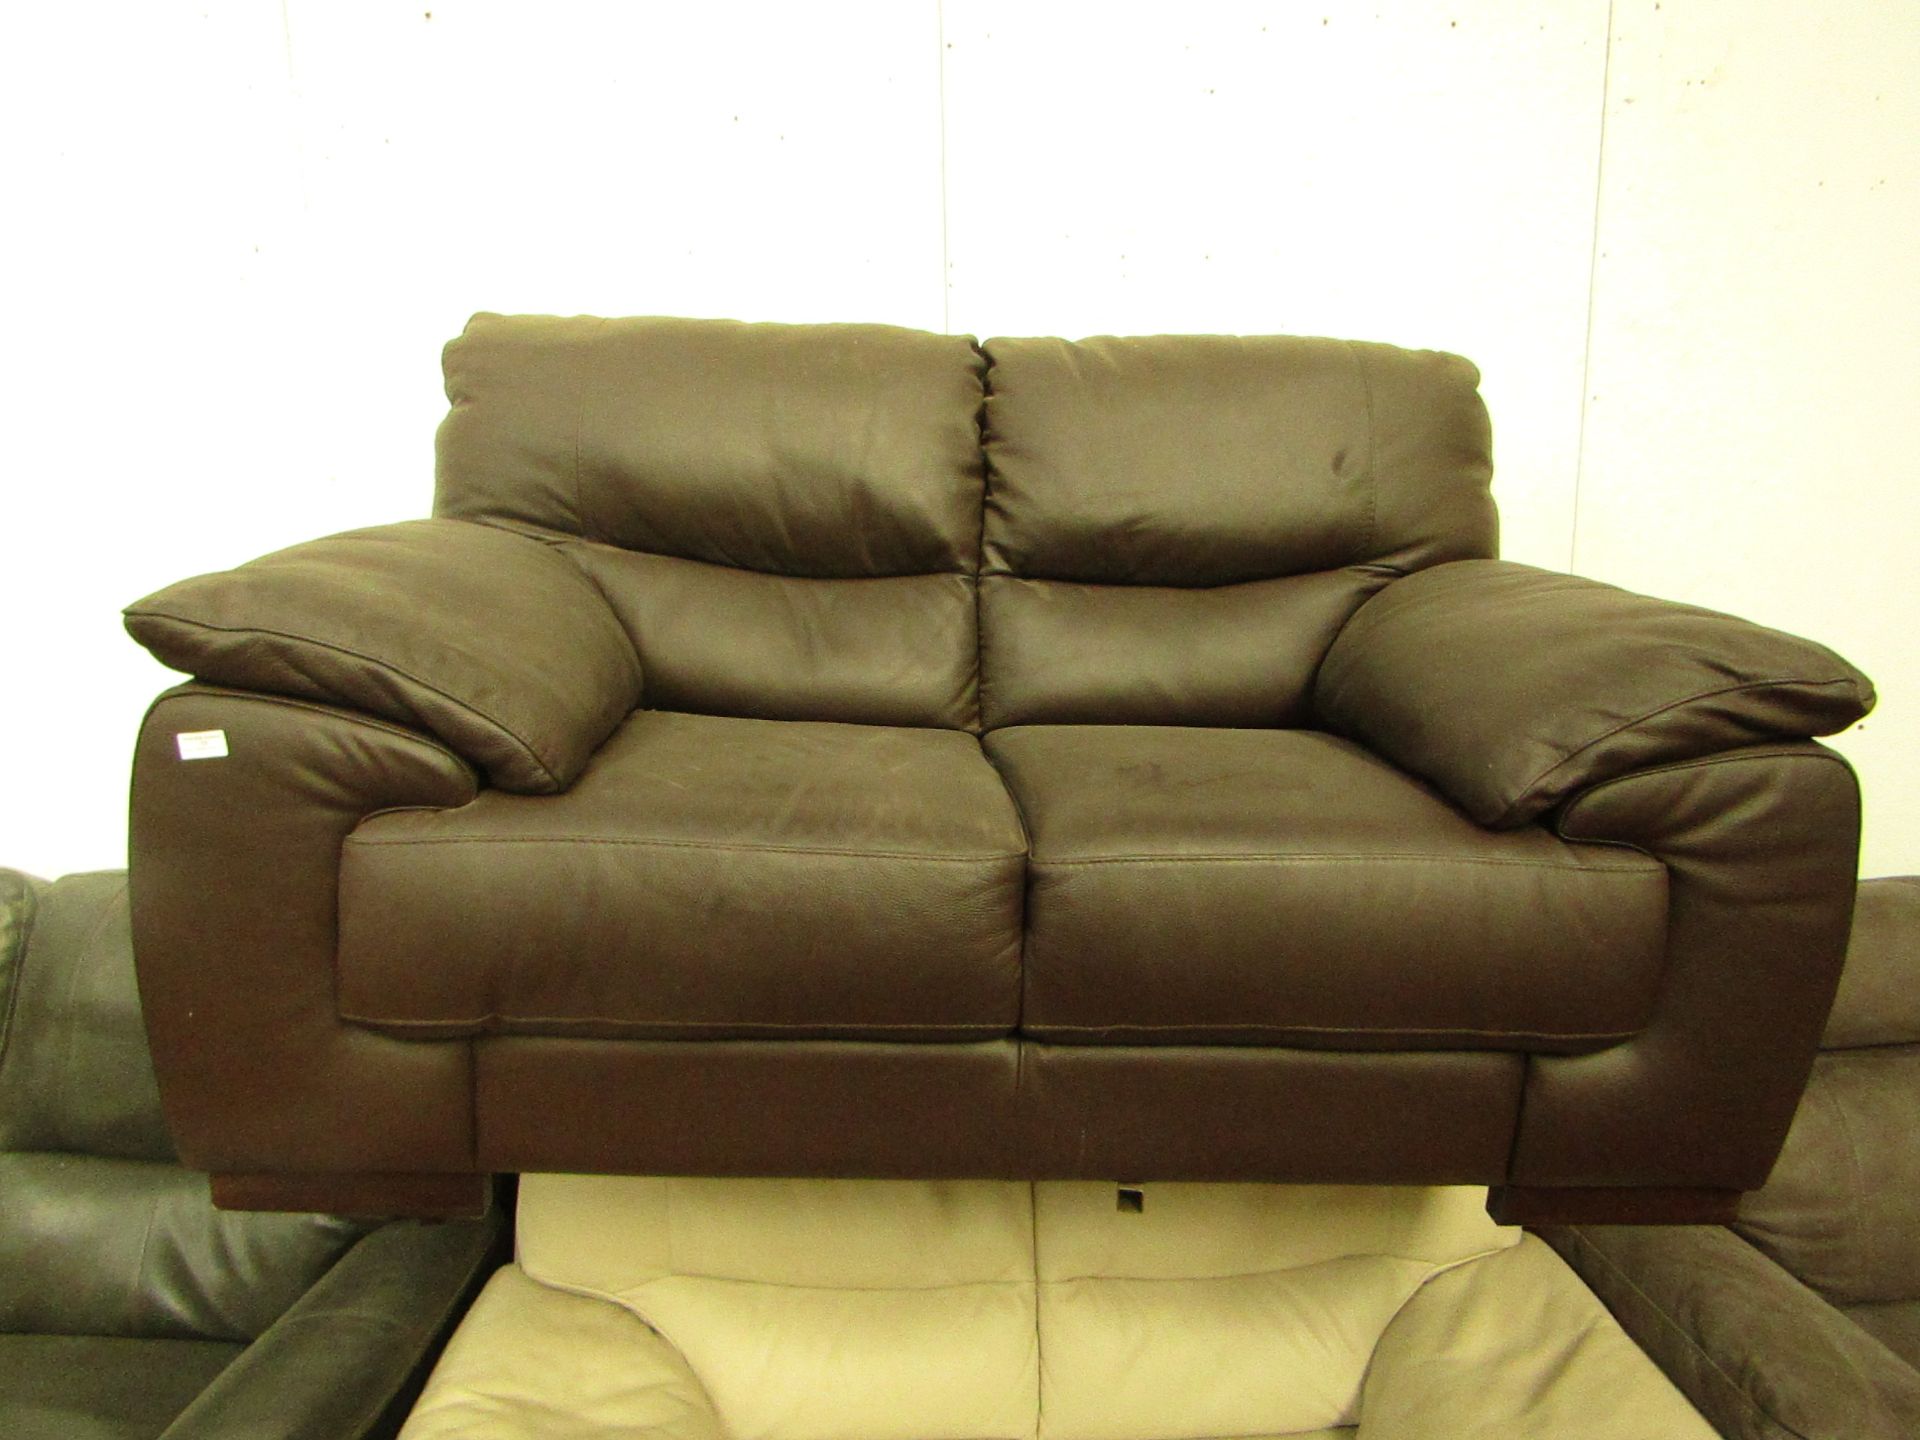 Costco Brown 2 seater leather sofa, no major damage